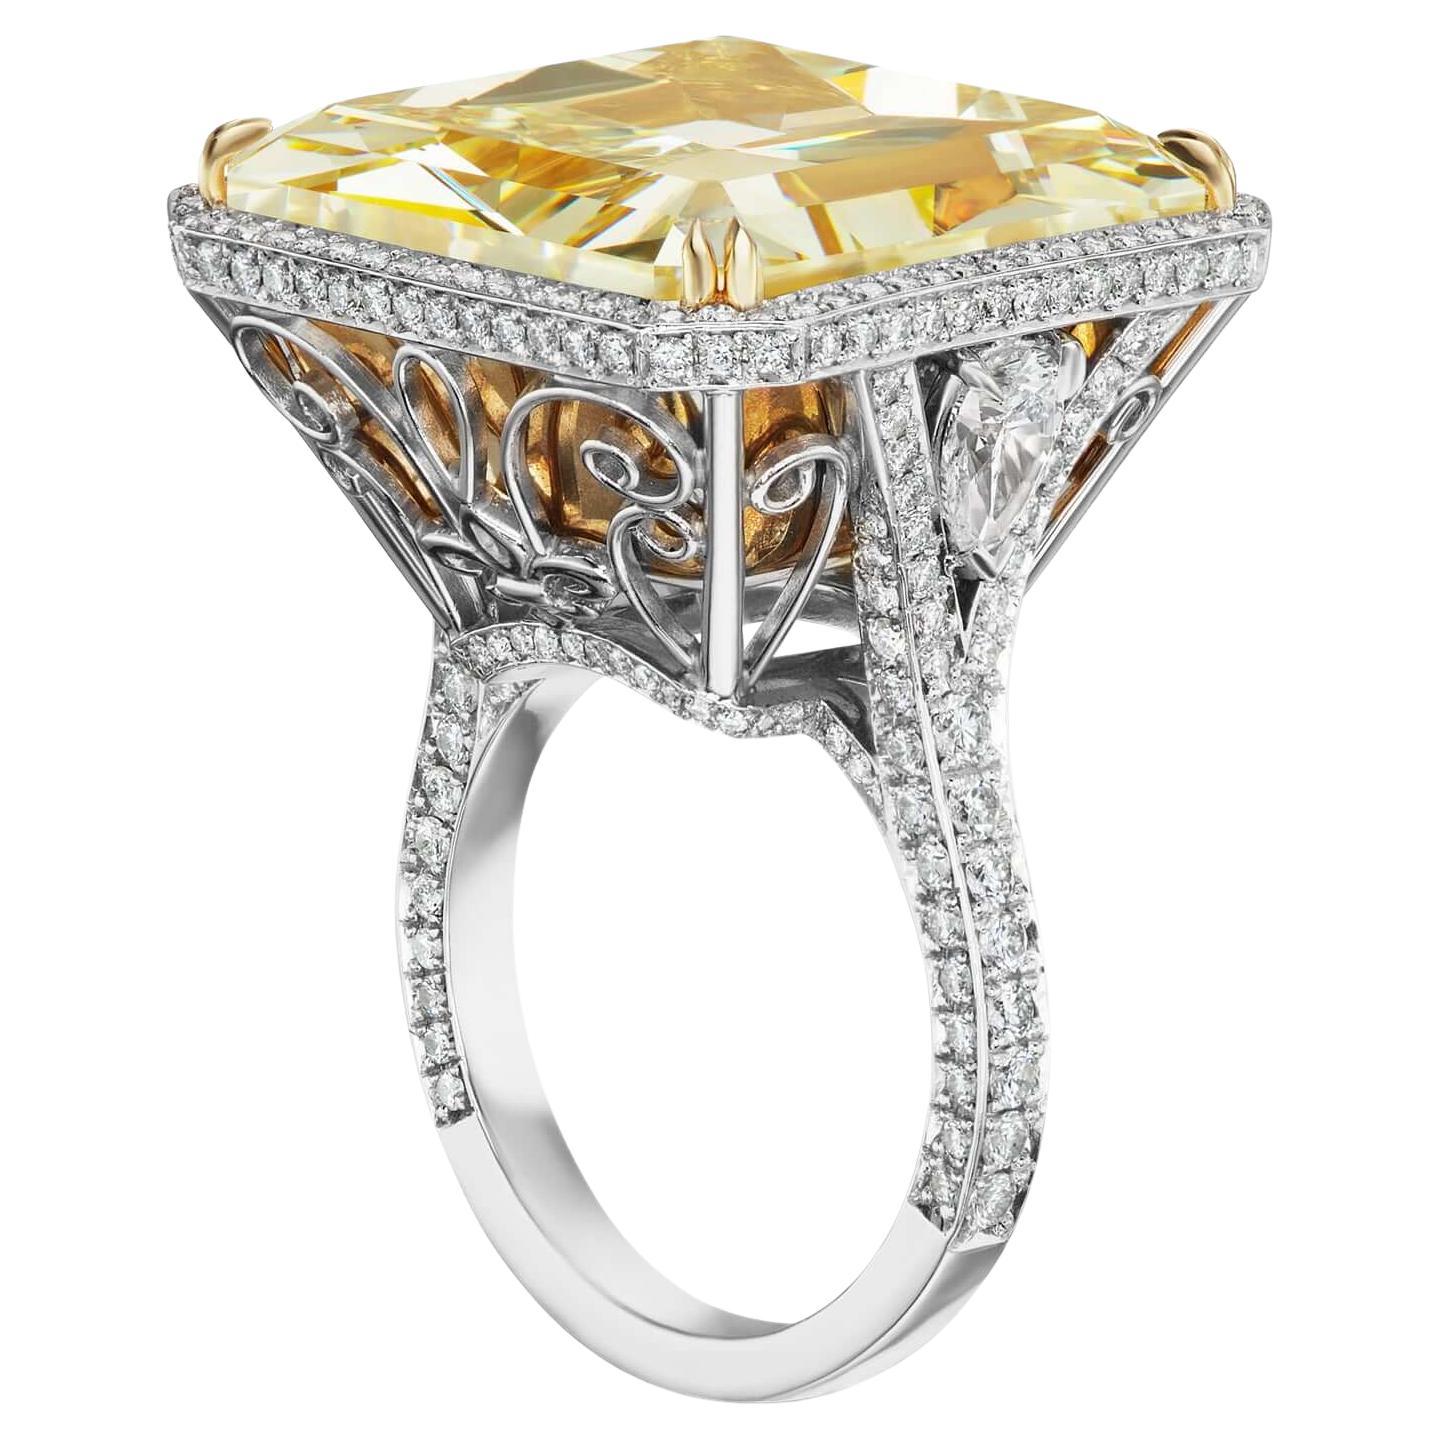 40 Carat Fancy Yellow Diamond Ring Radiant Cut GIA Certified